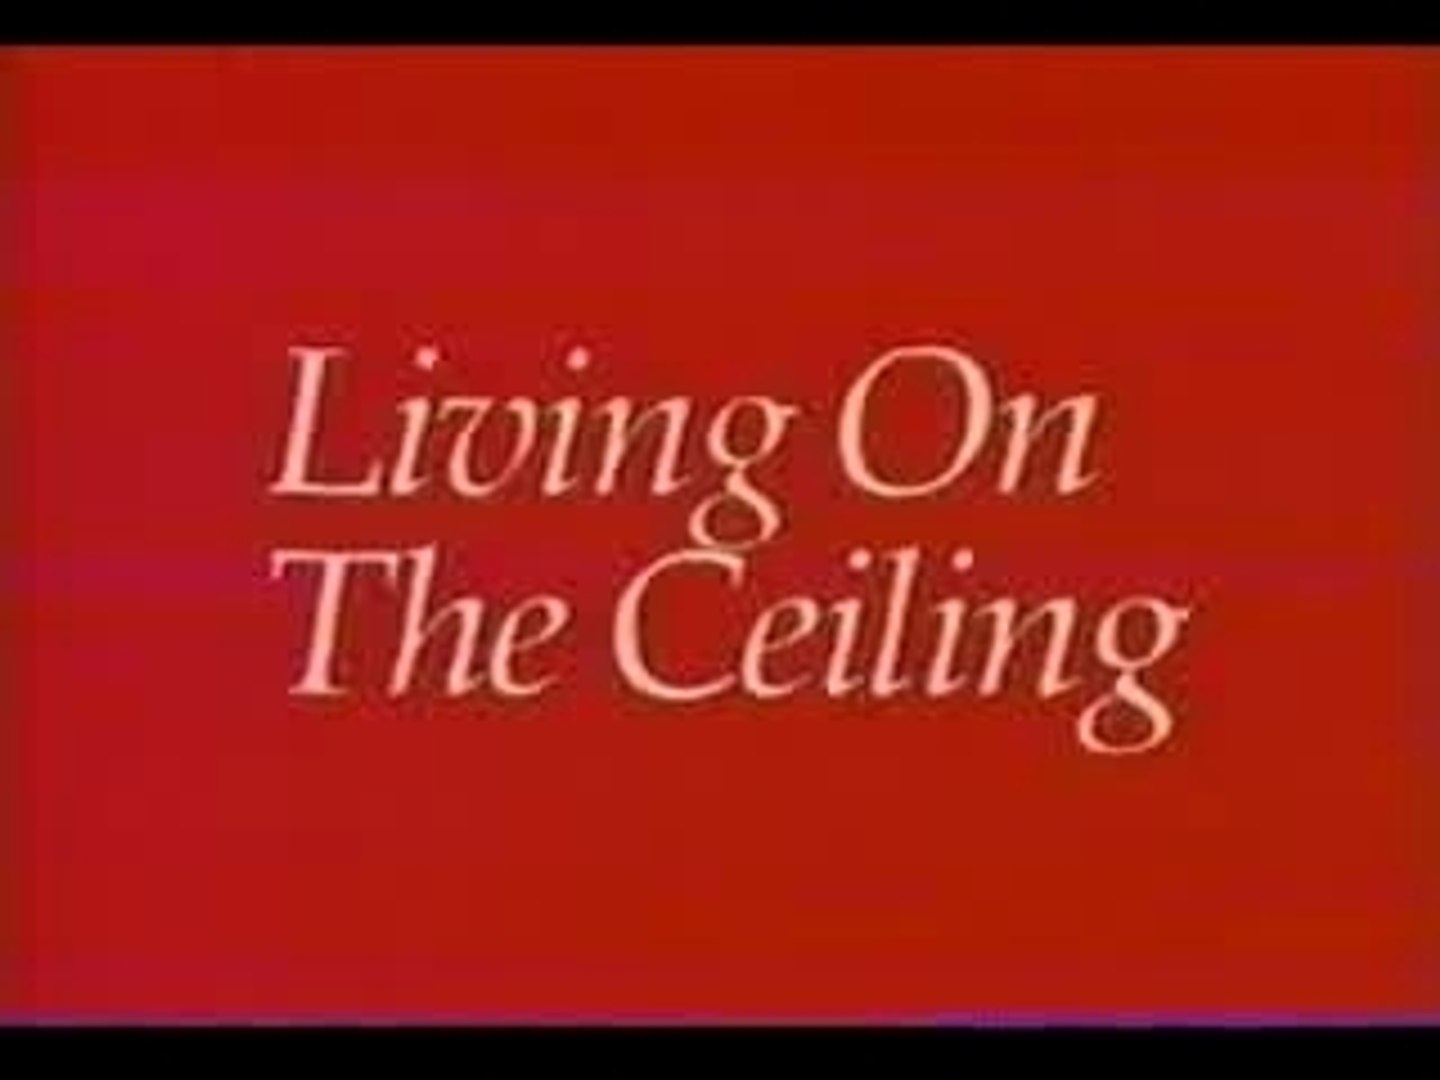 Blancmange Living On The Ceiling